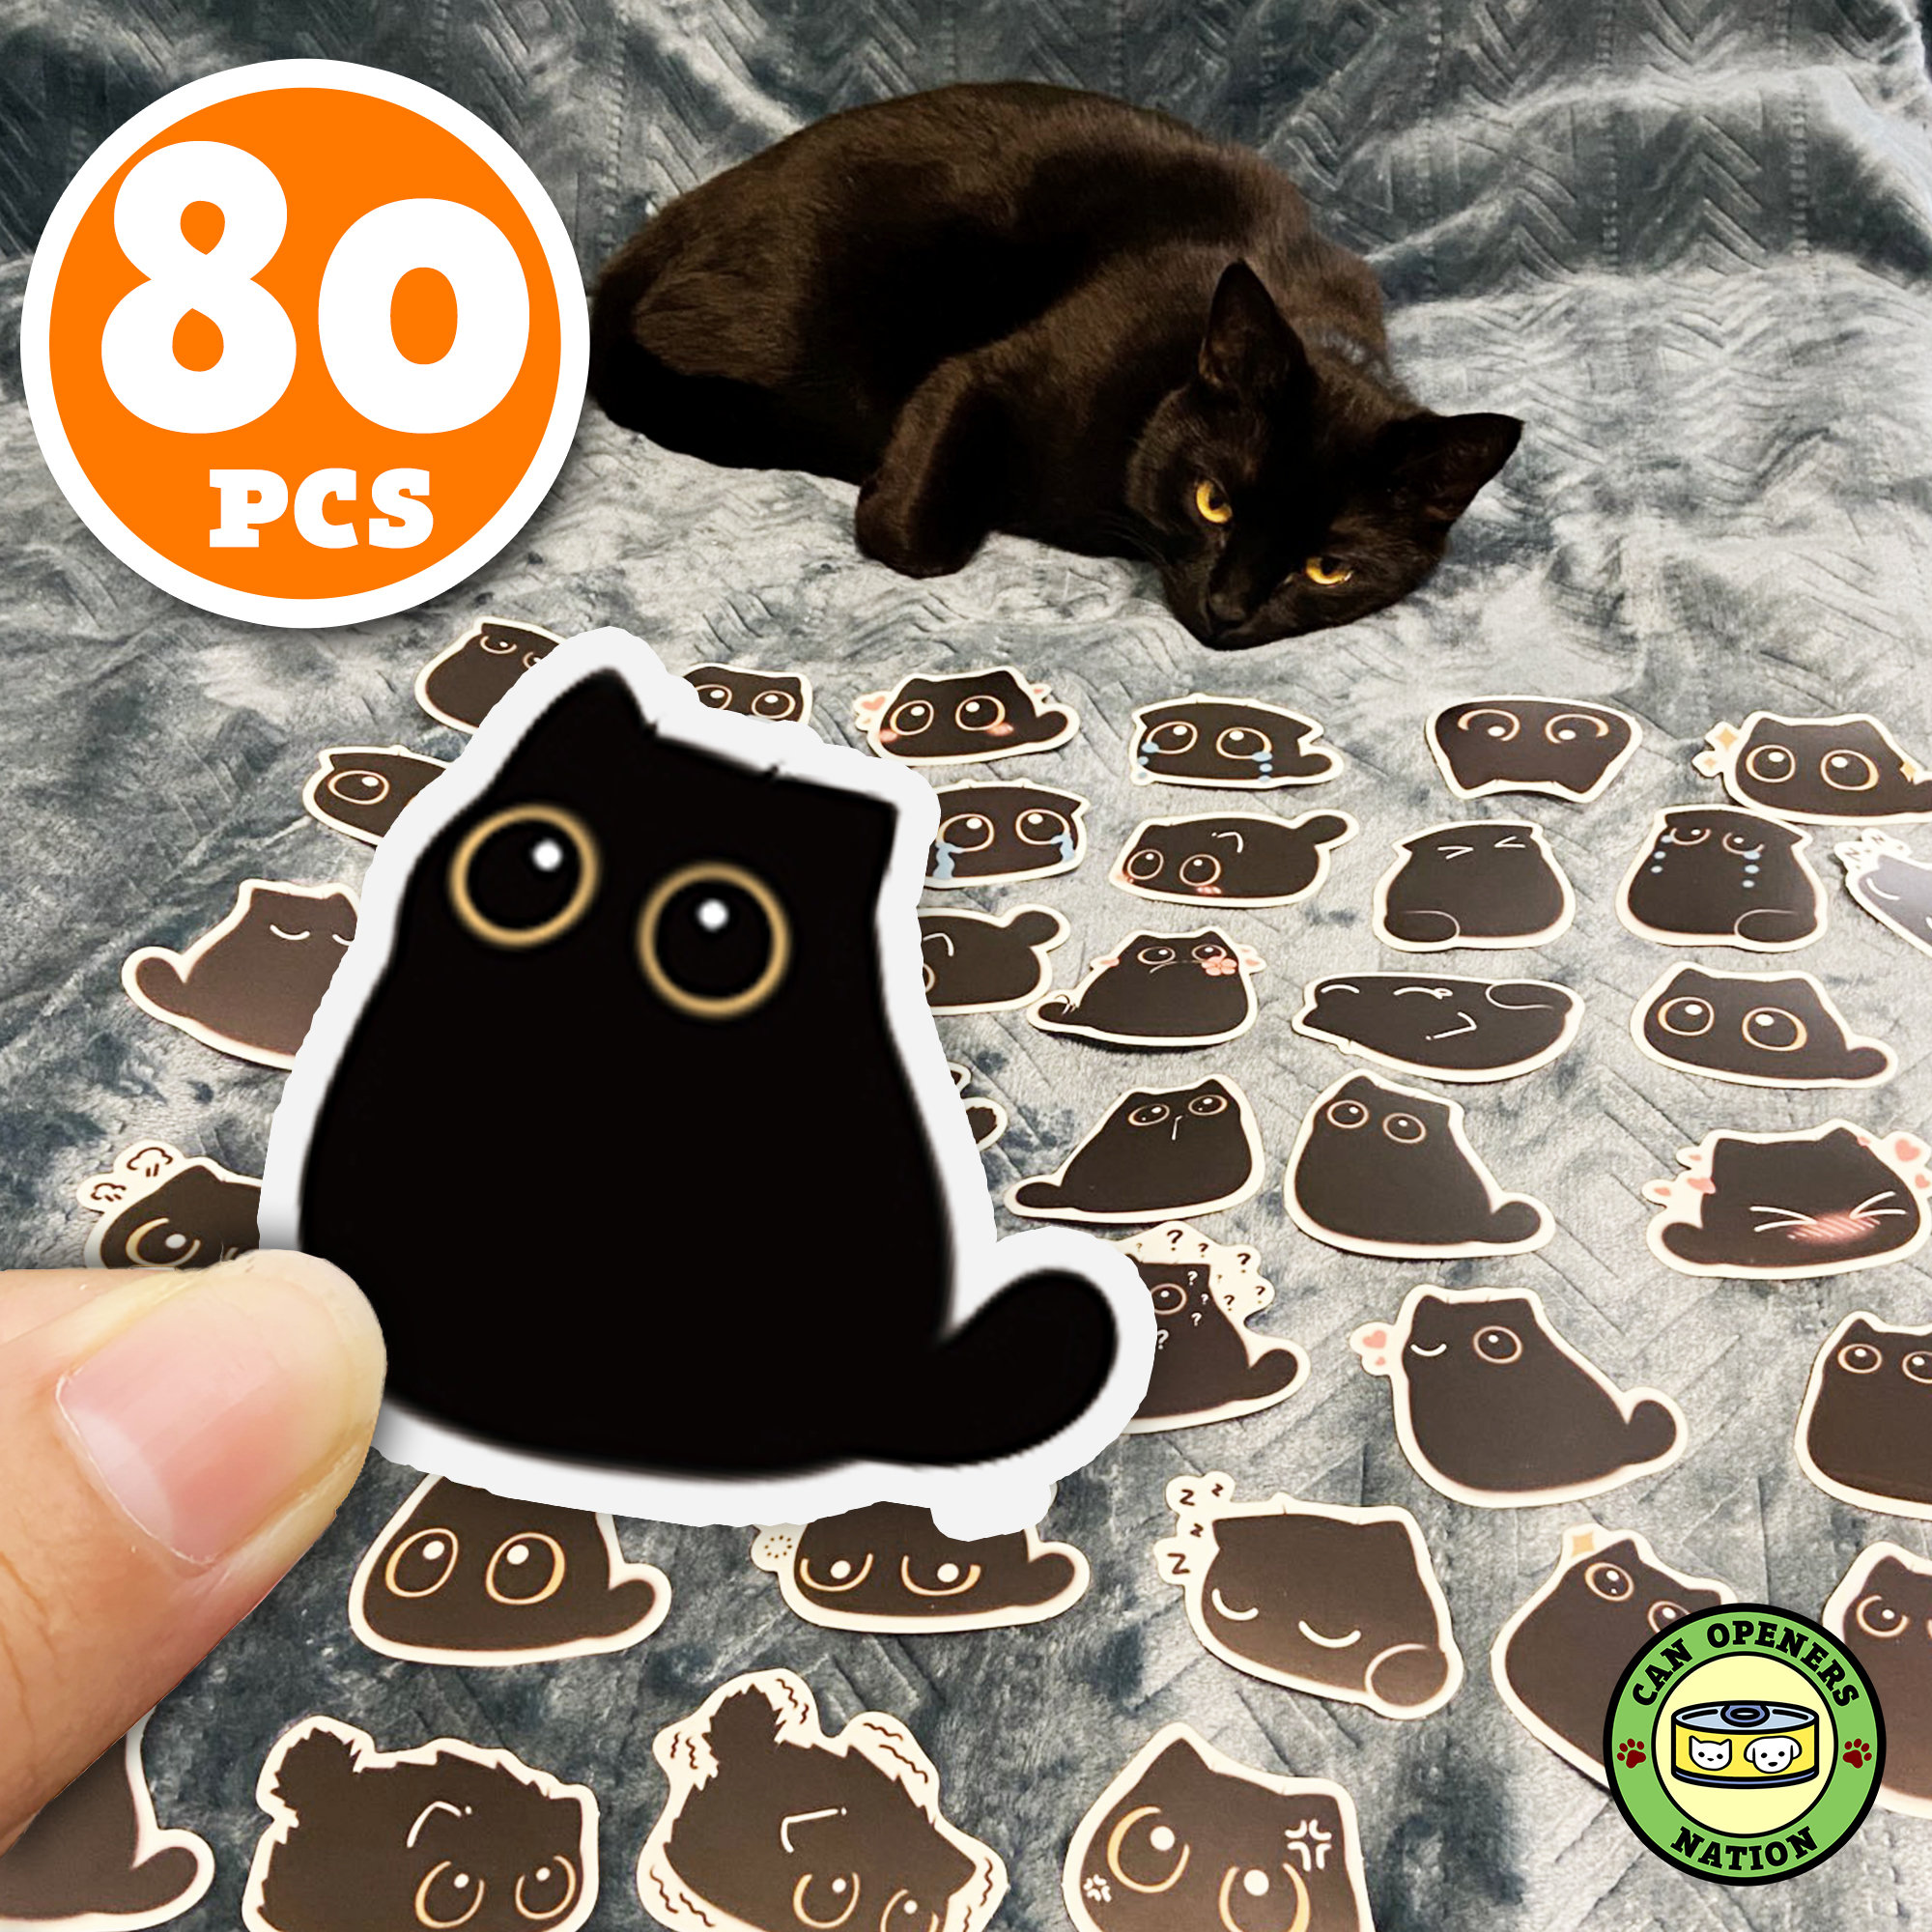 10/20/40/80pcs Kawaii Black Cat Cute Stickers Art Decals Laptop